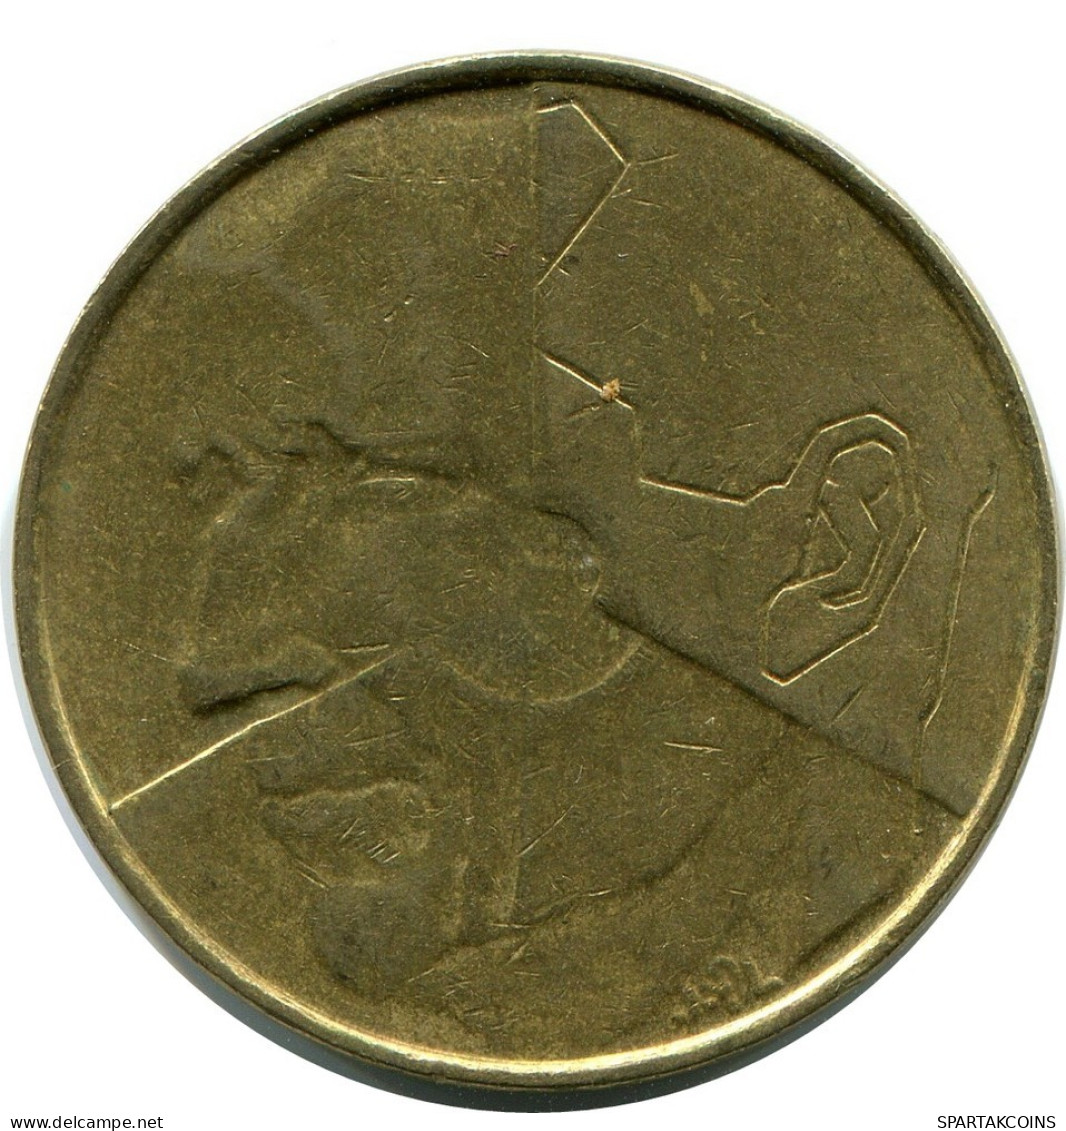 5 FRANCS 1987 DUTCH Text BELGIUM Coin #AZ340.U.A - 5 Frank